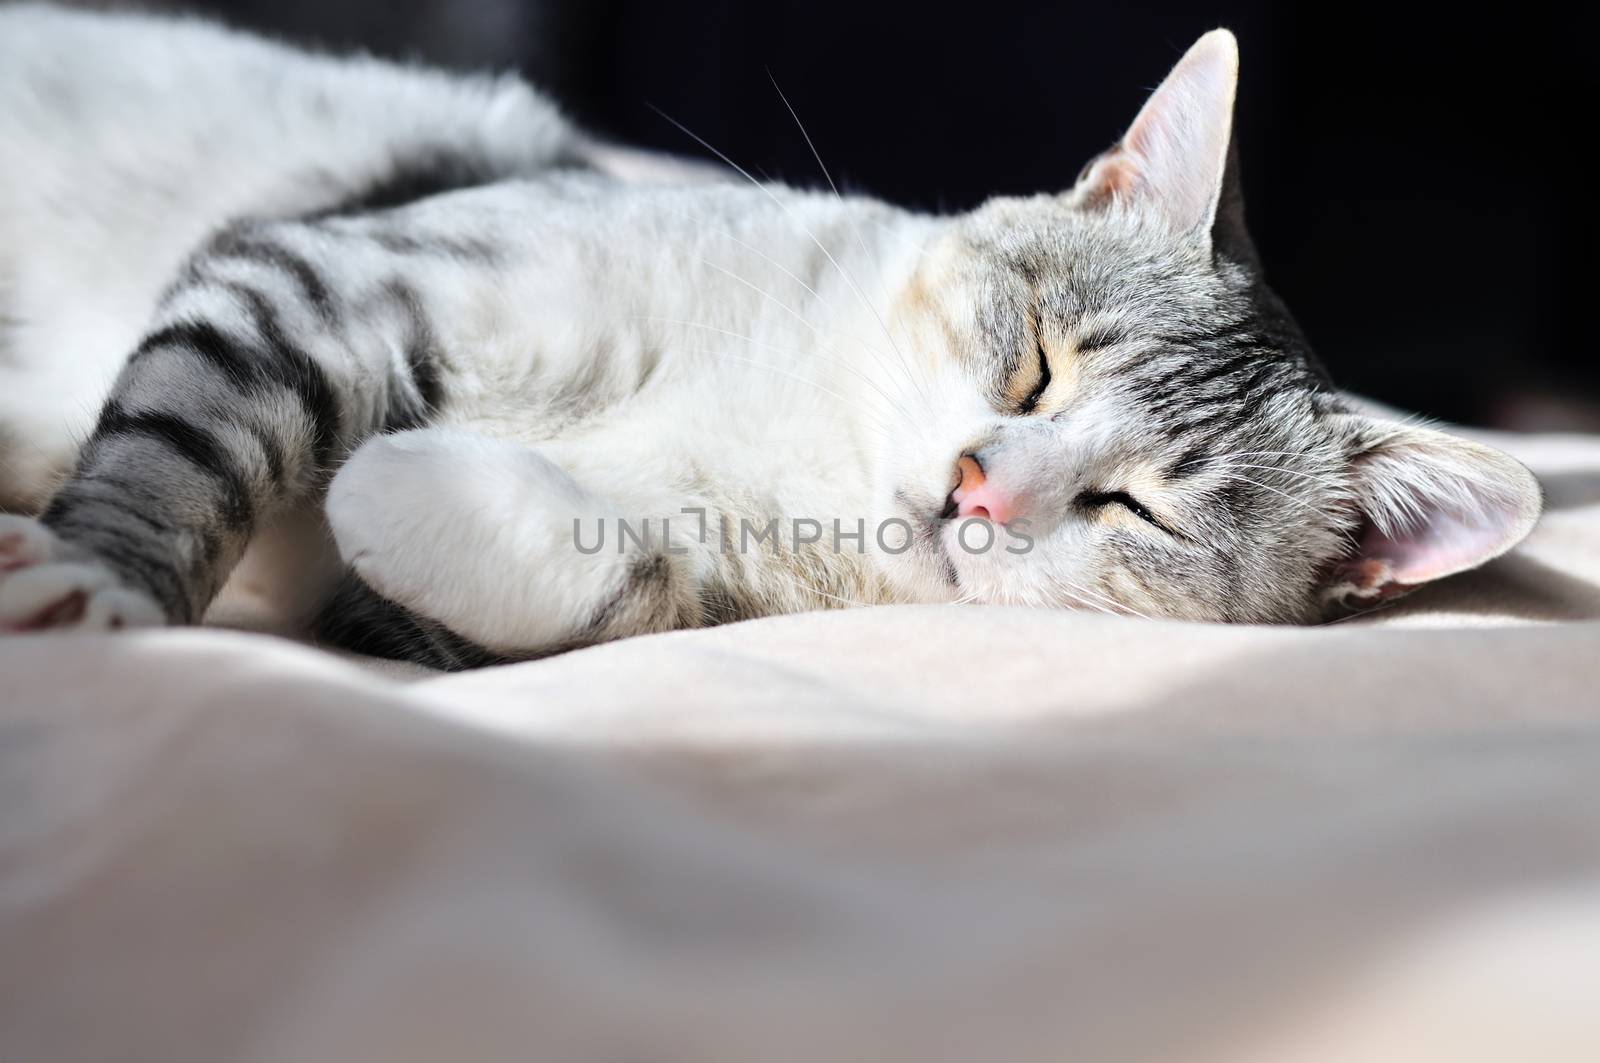 dozy gray cat on the bed